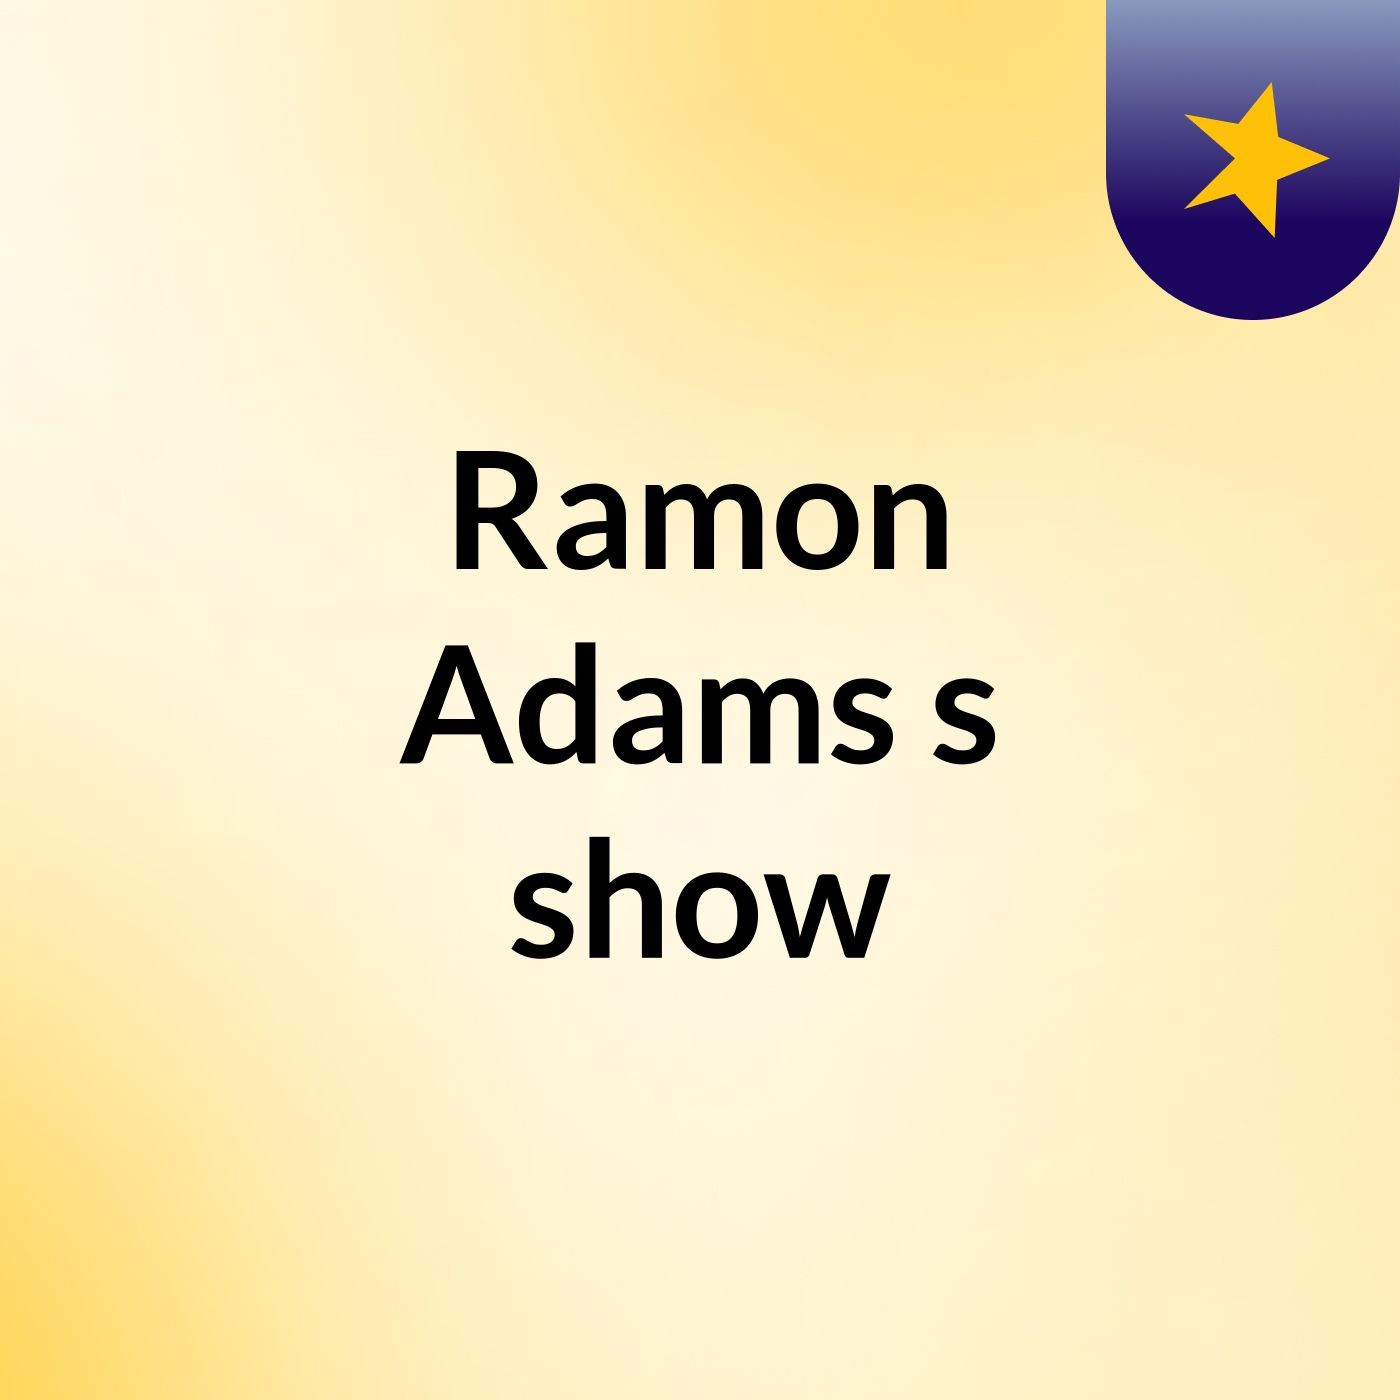 Ramon Adams's show